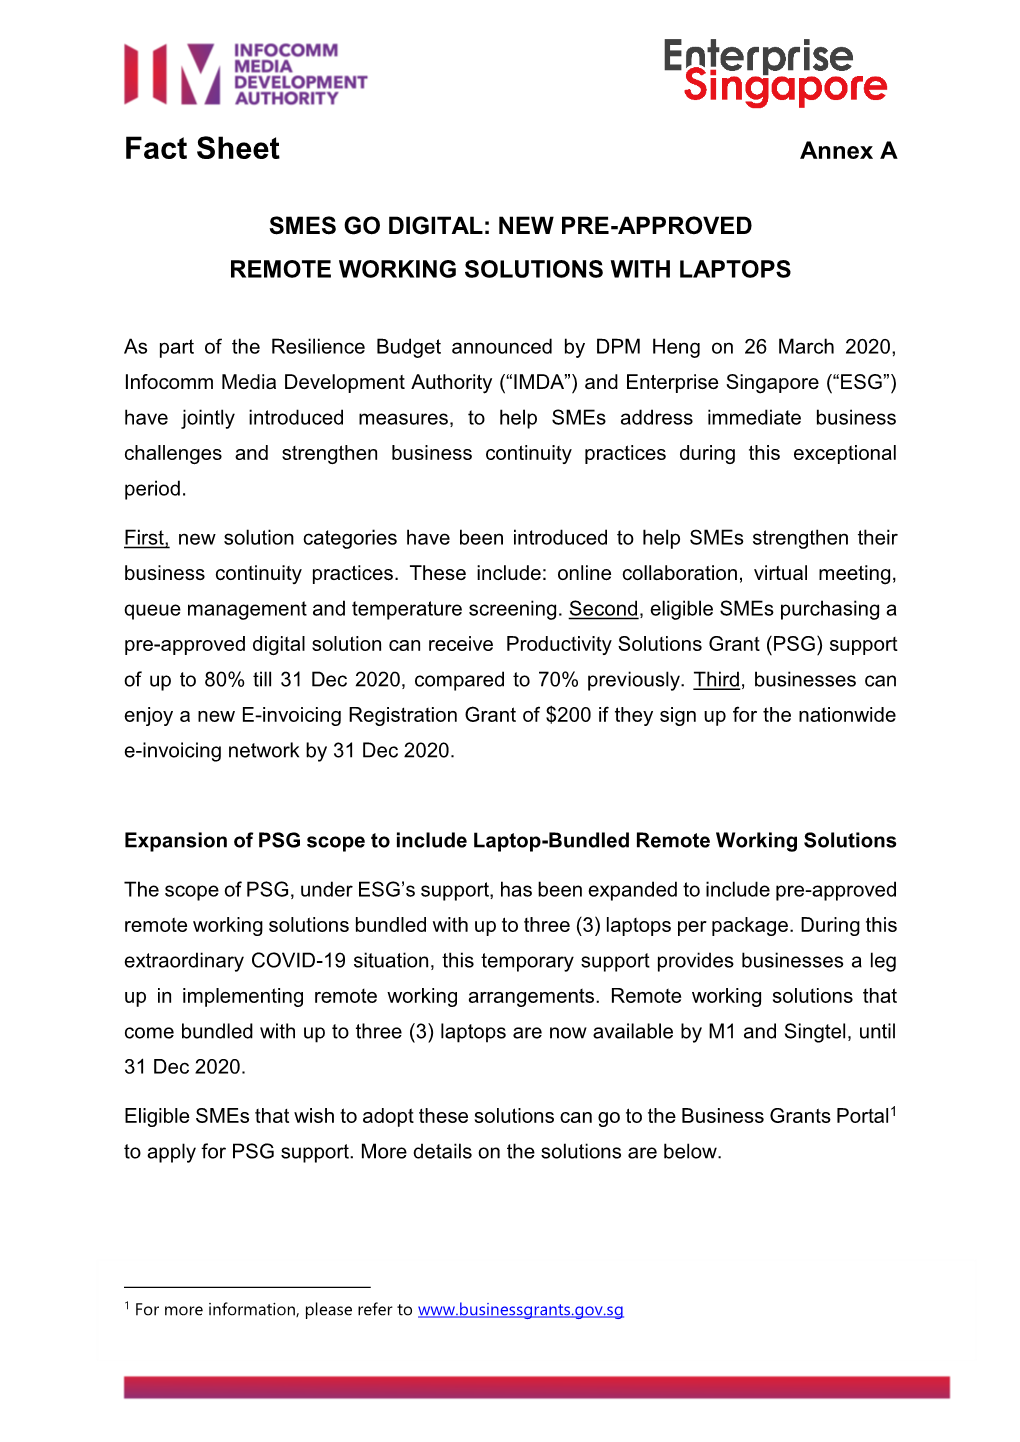 Factsheet on Laptop-Bundled Remote Working Solutions